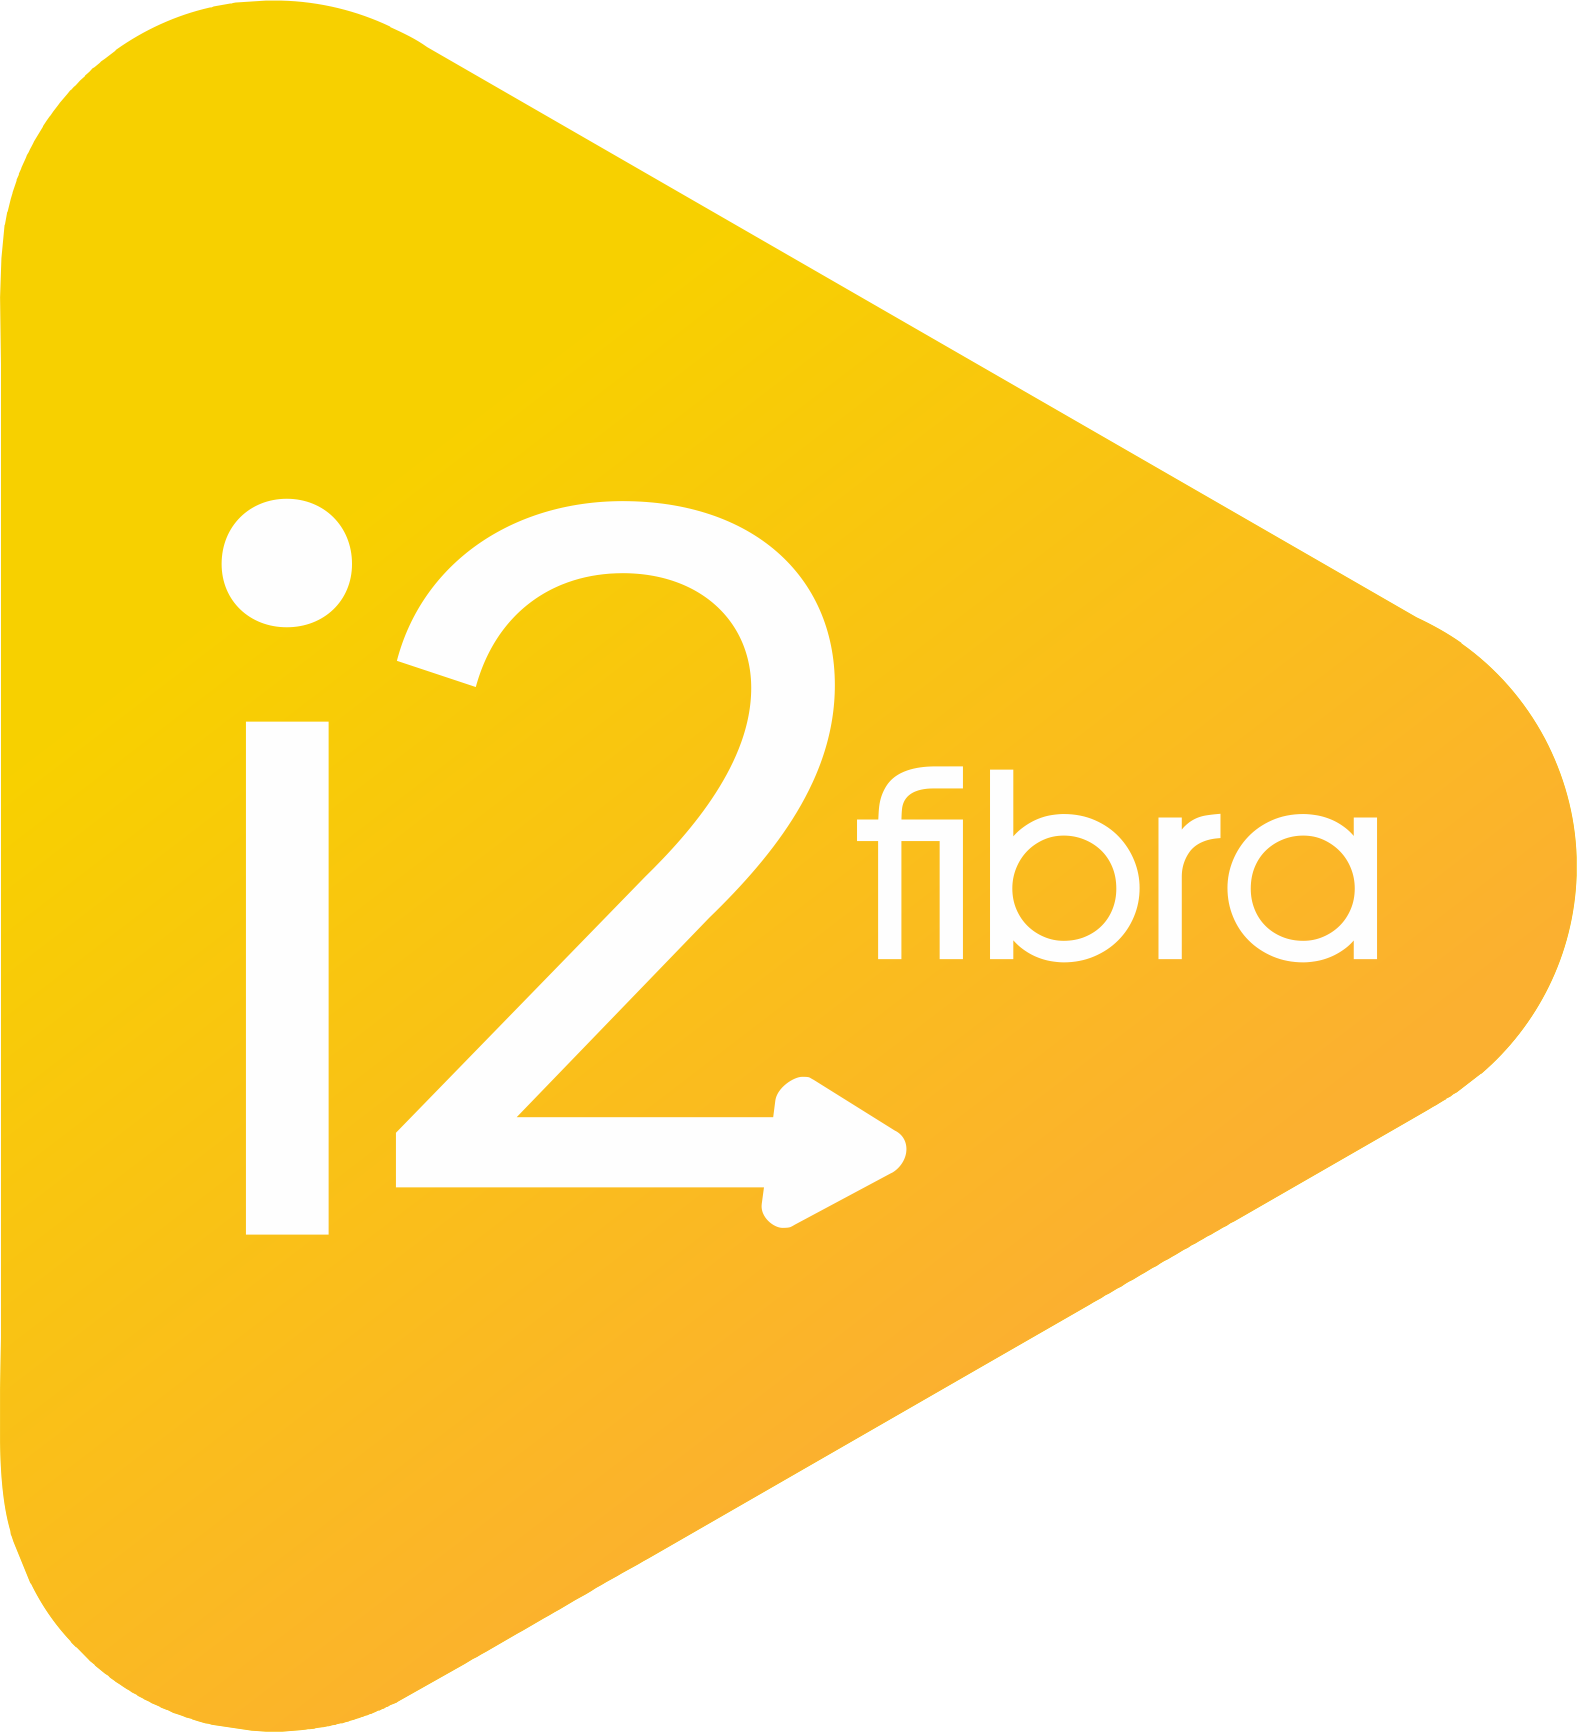 I2 Fibra